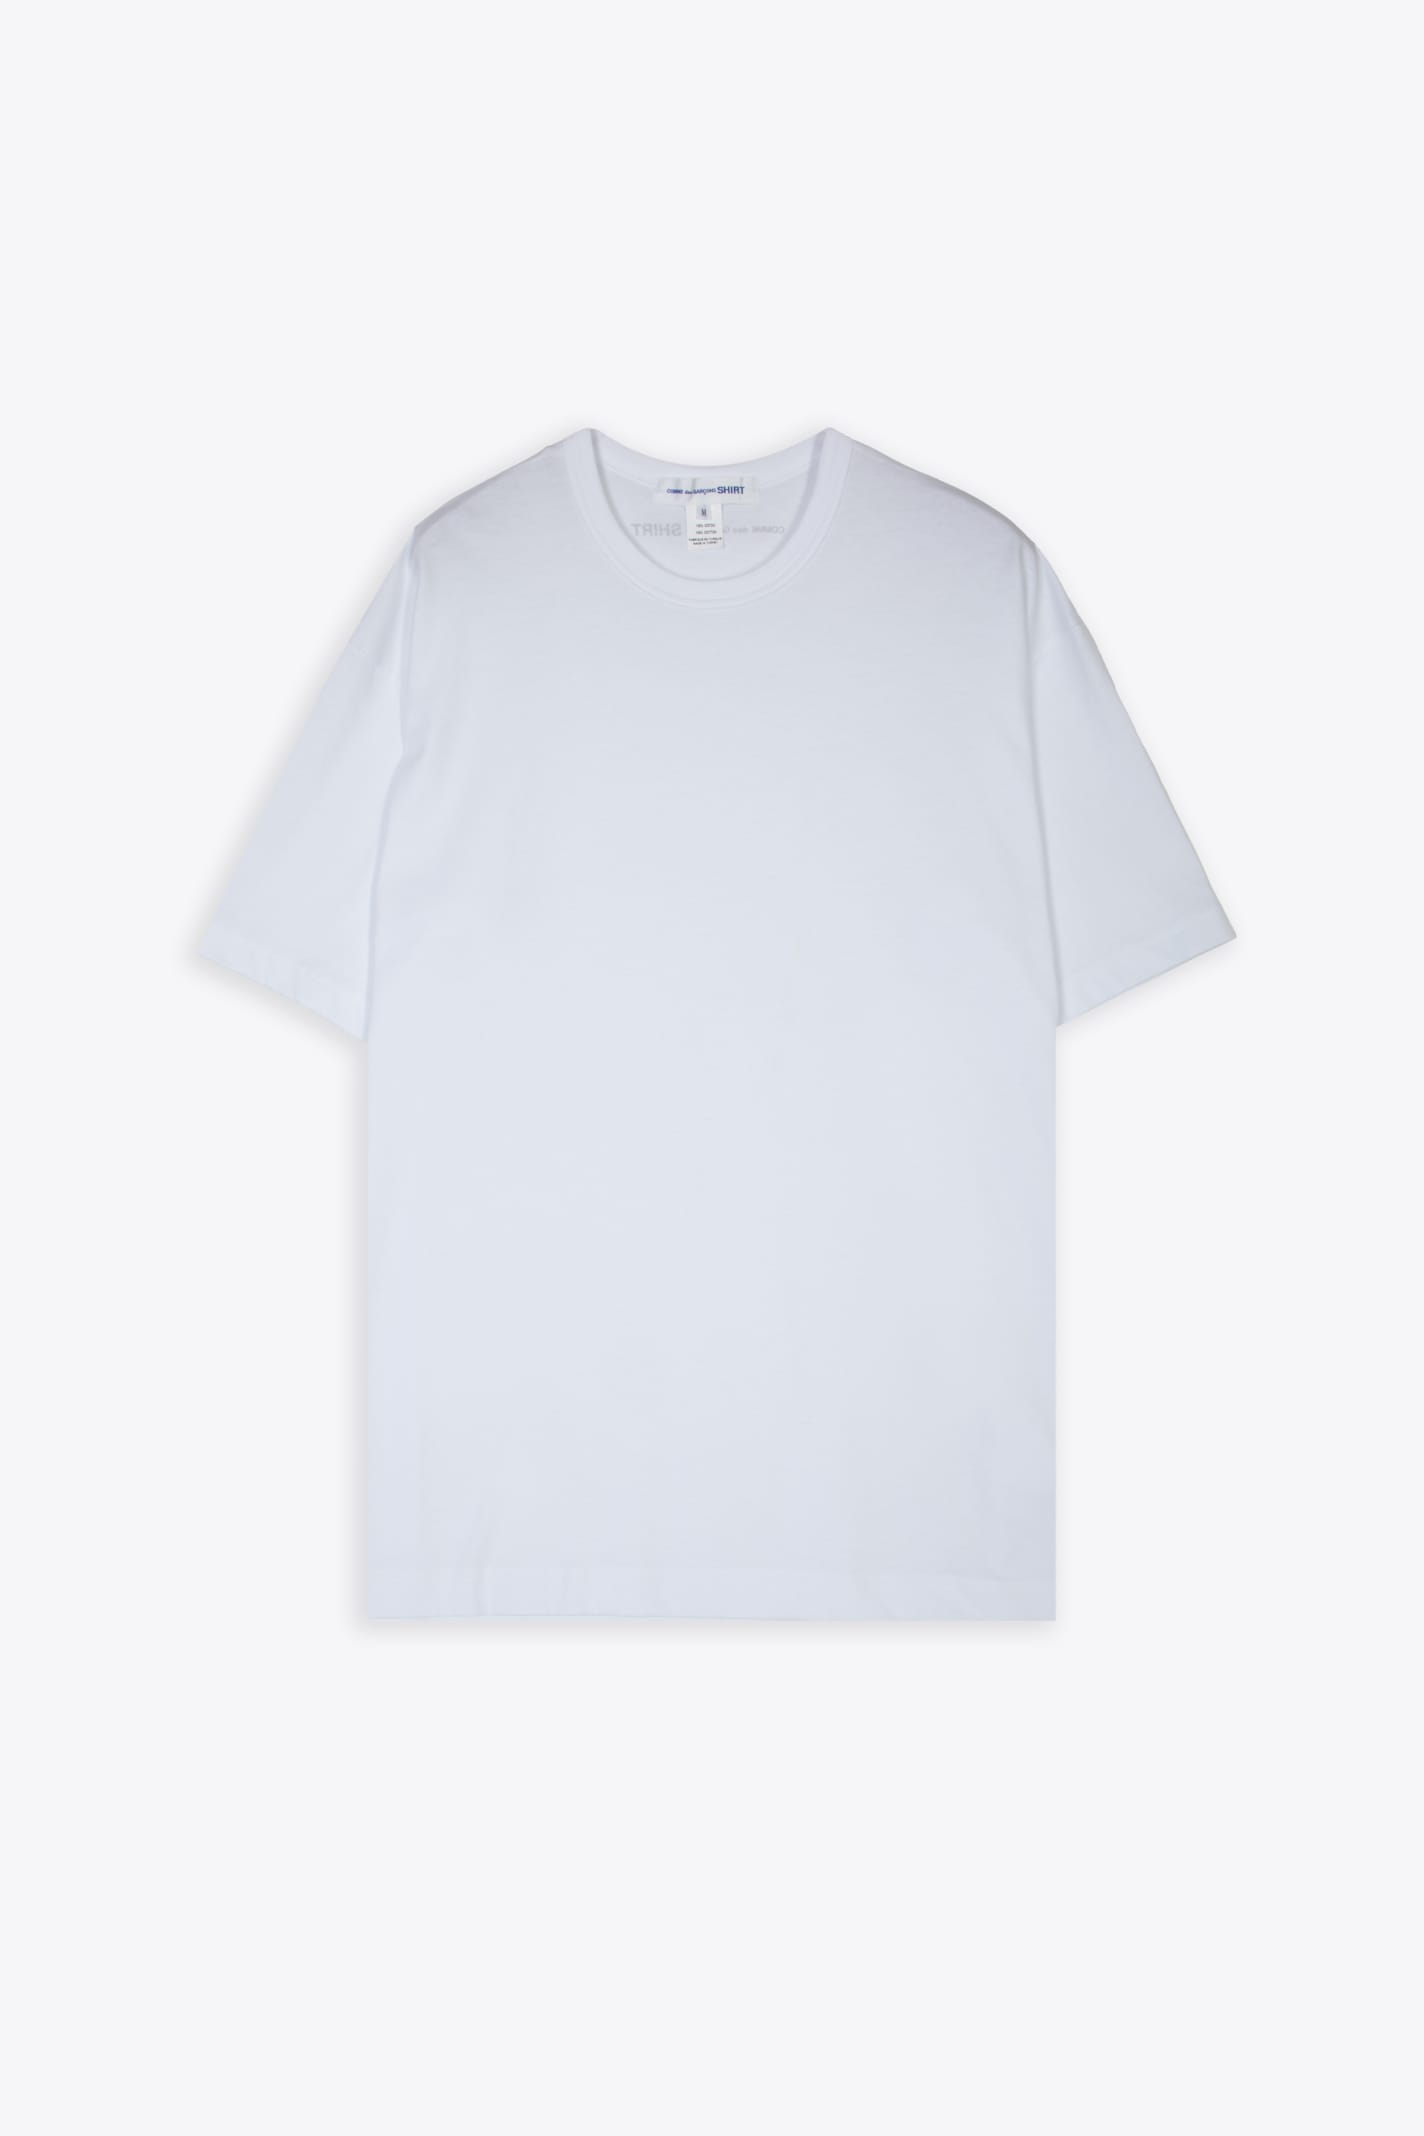 Mens T-shirt Knit White cotton oversize t-shirt with logo